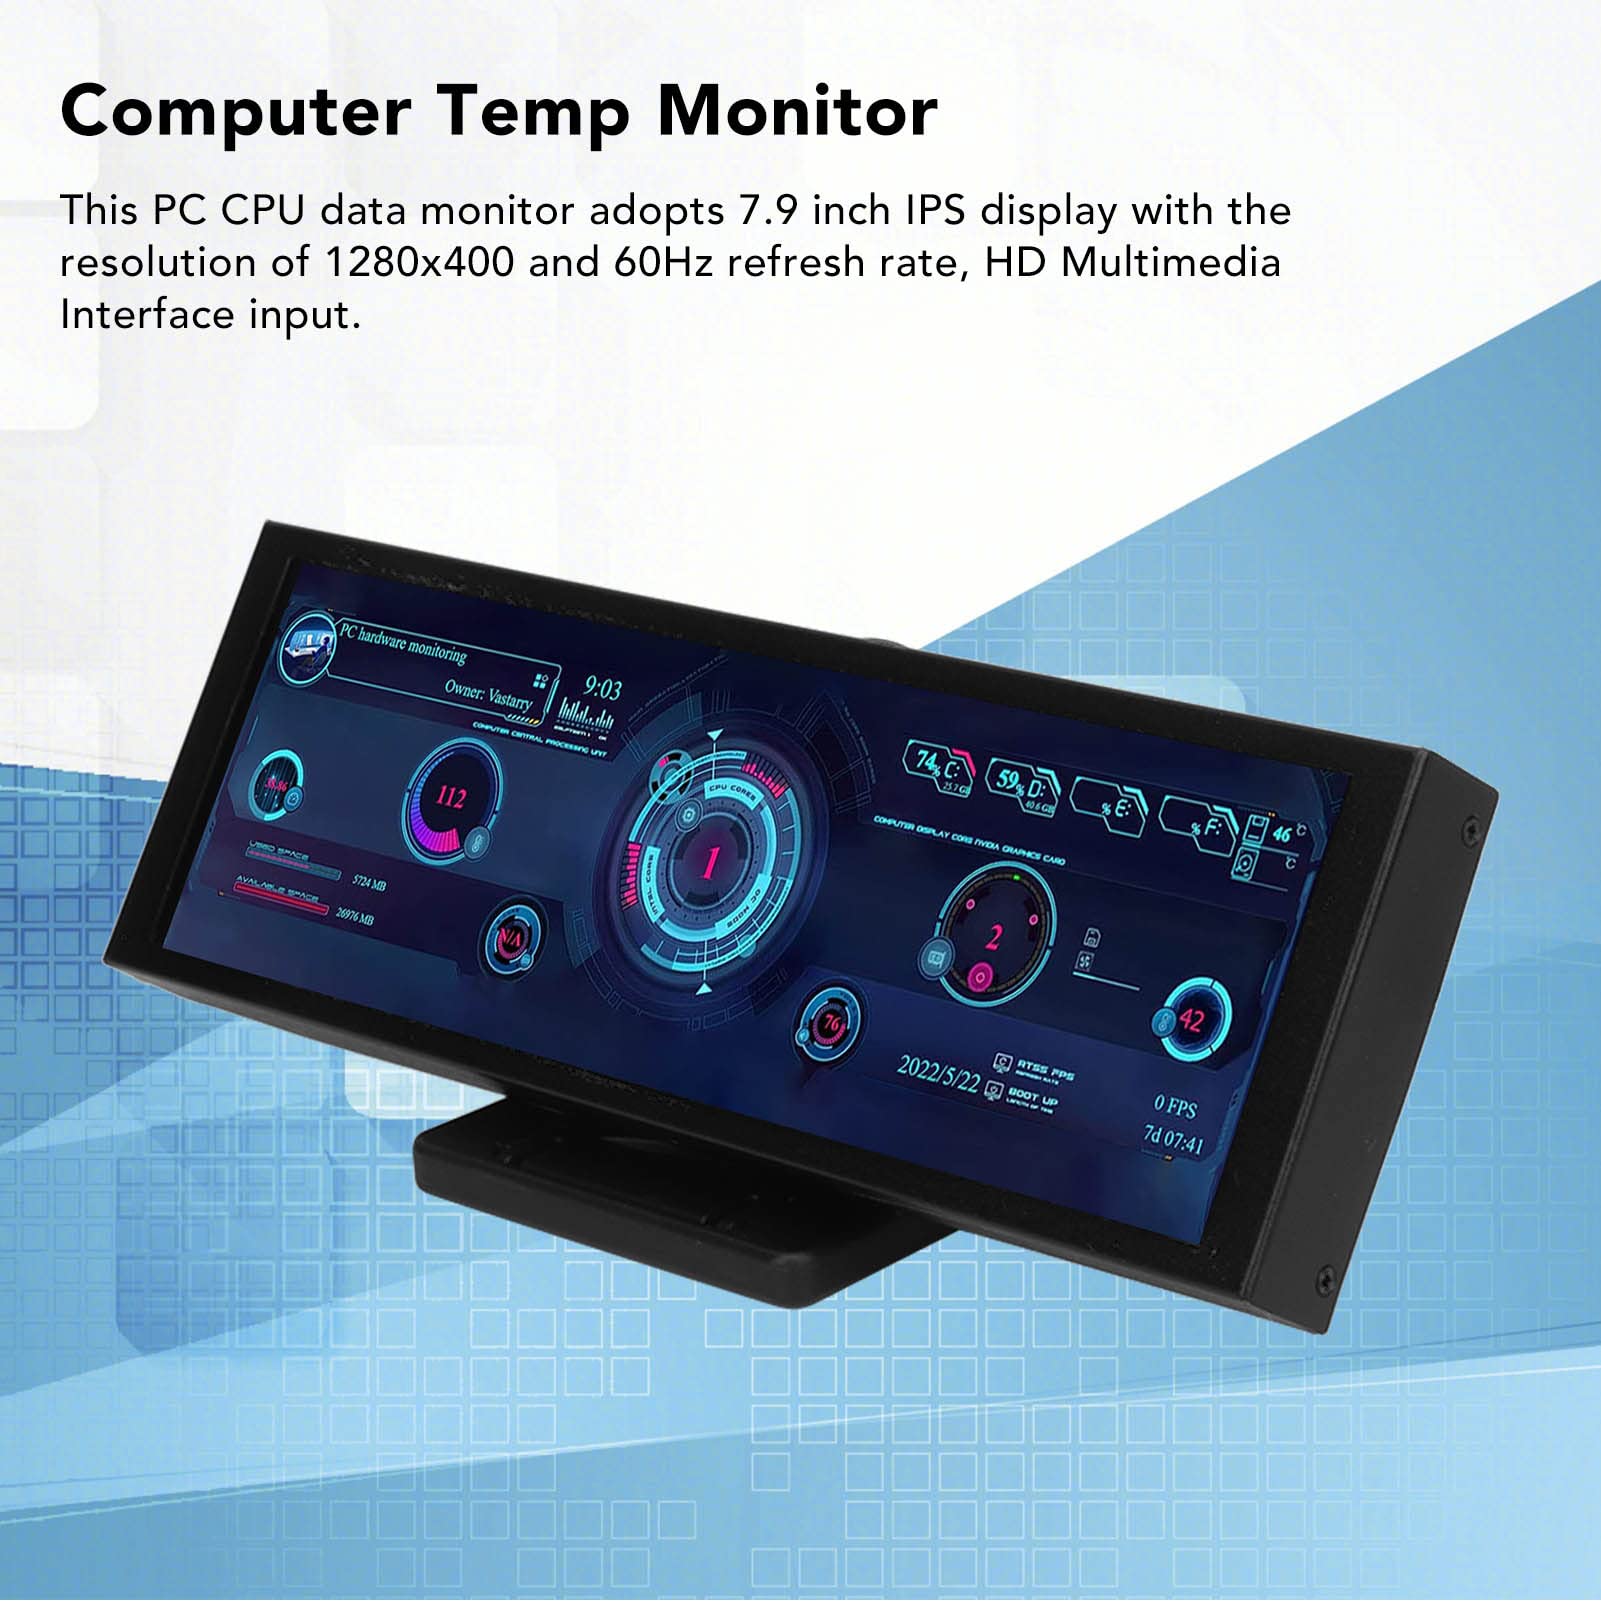 EBTOOLS PC CPU Data Monitor, 7.9 Inch IPS Screen, Customizable Theme Editor, Rotatable, Auto Off, USB Power, Dimmable Computer Temp Monitor, for CPU GPU RAM